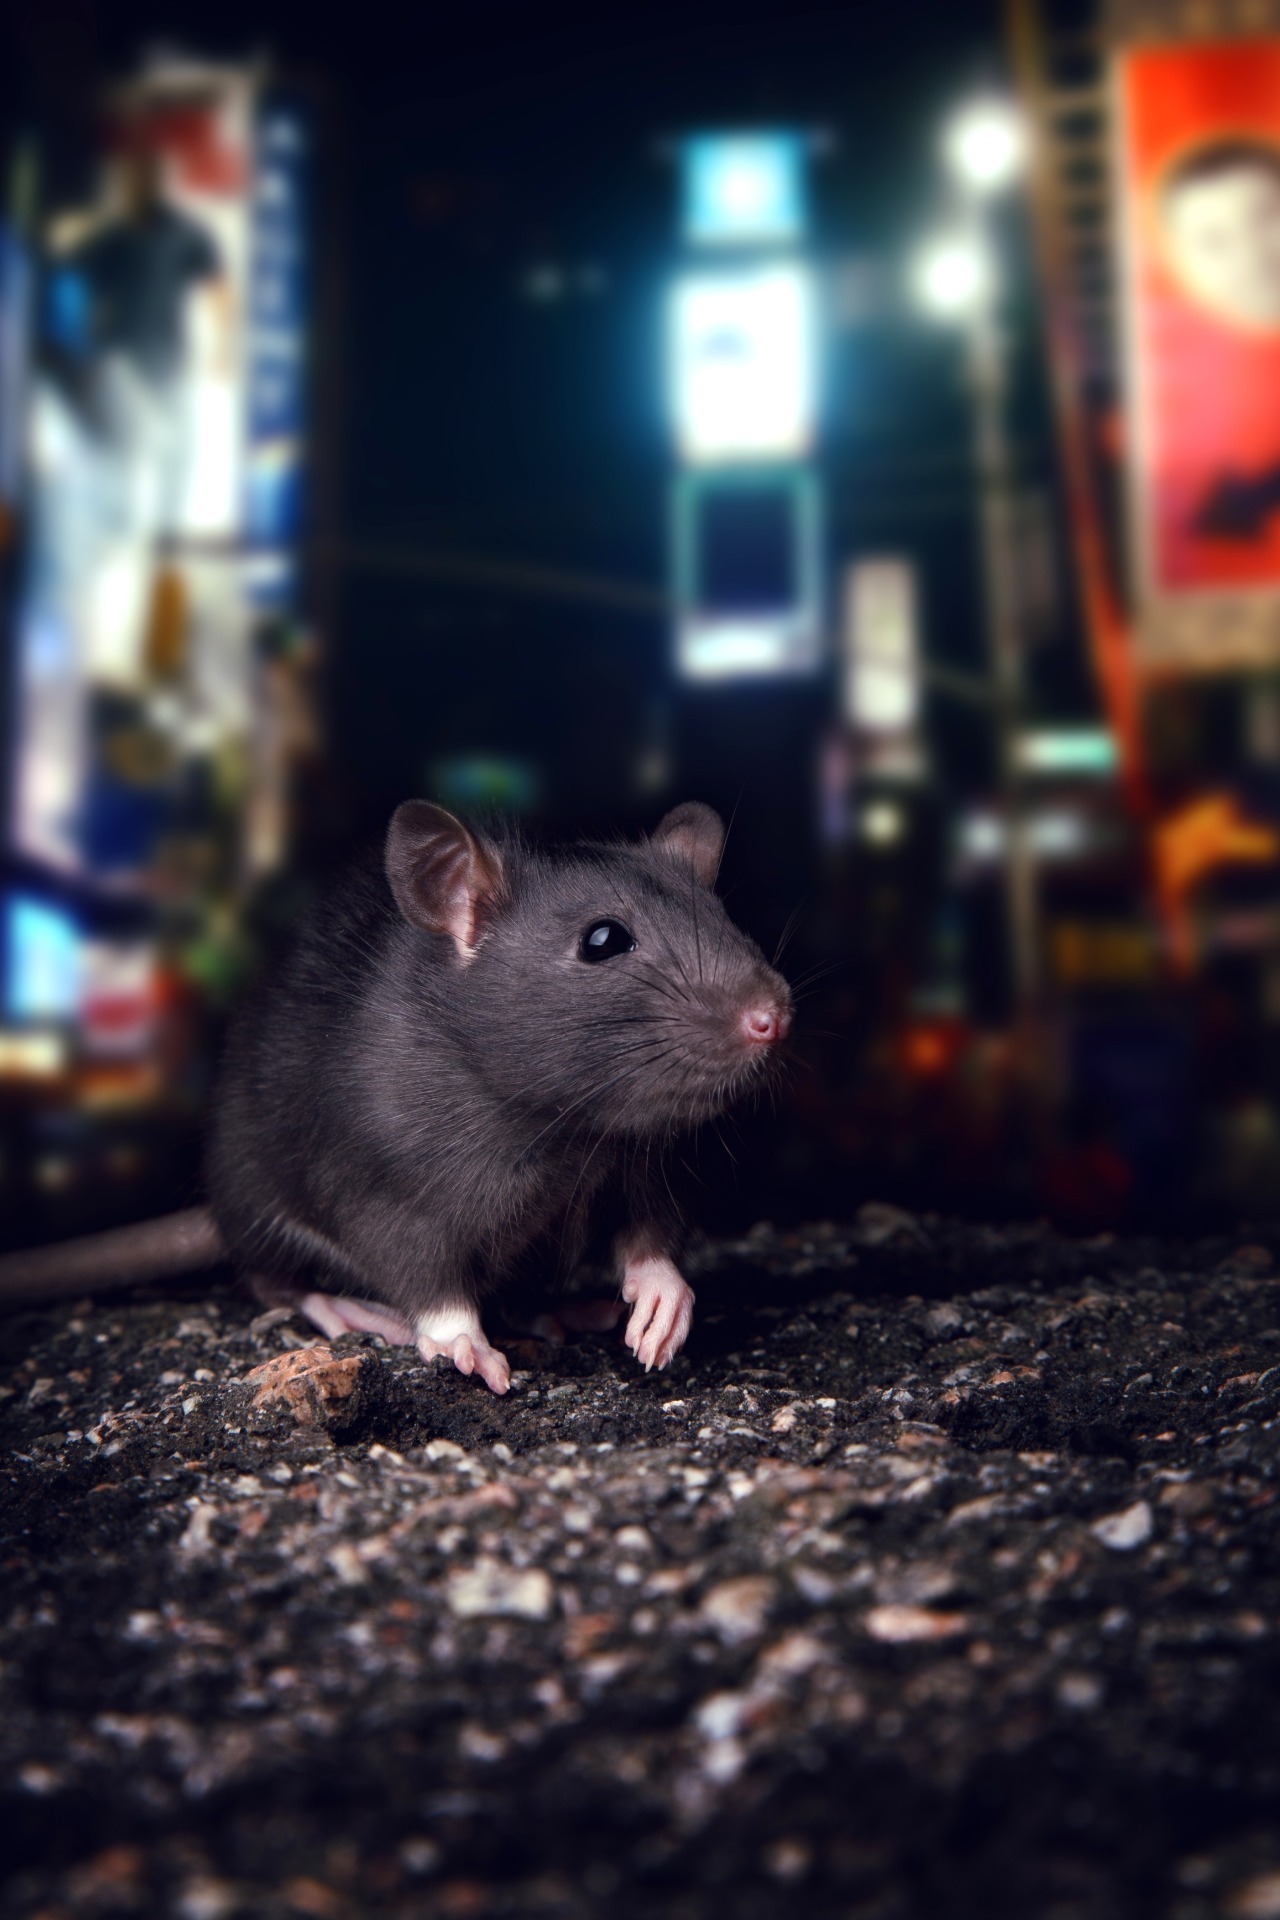 Rat feeding at night on the street